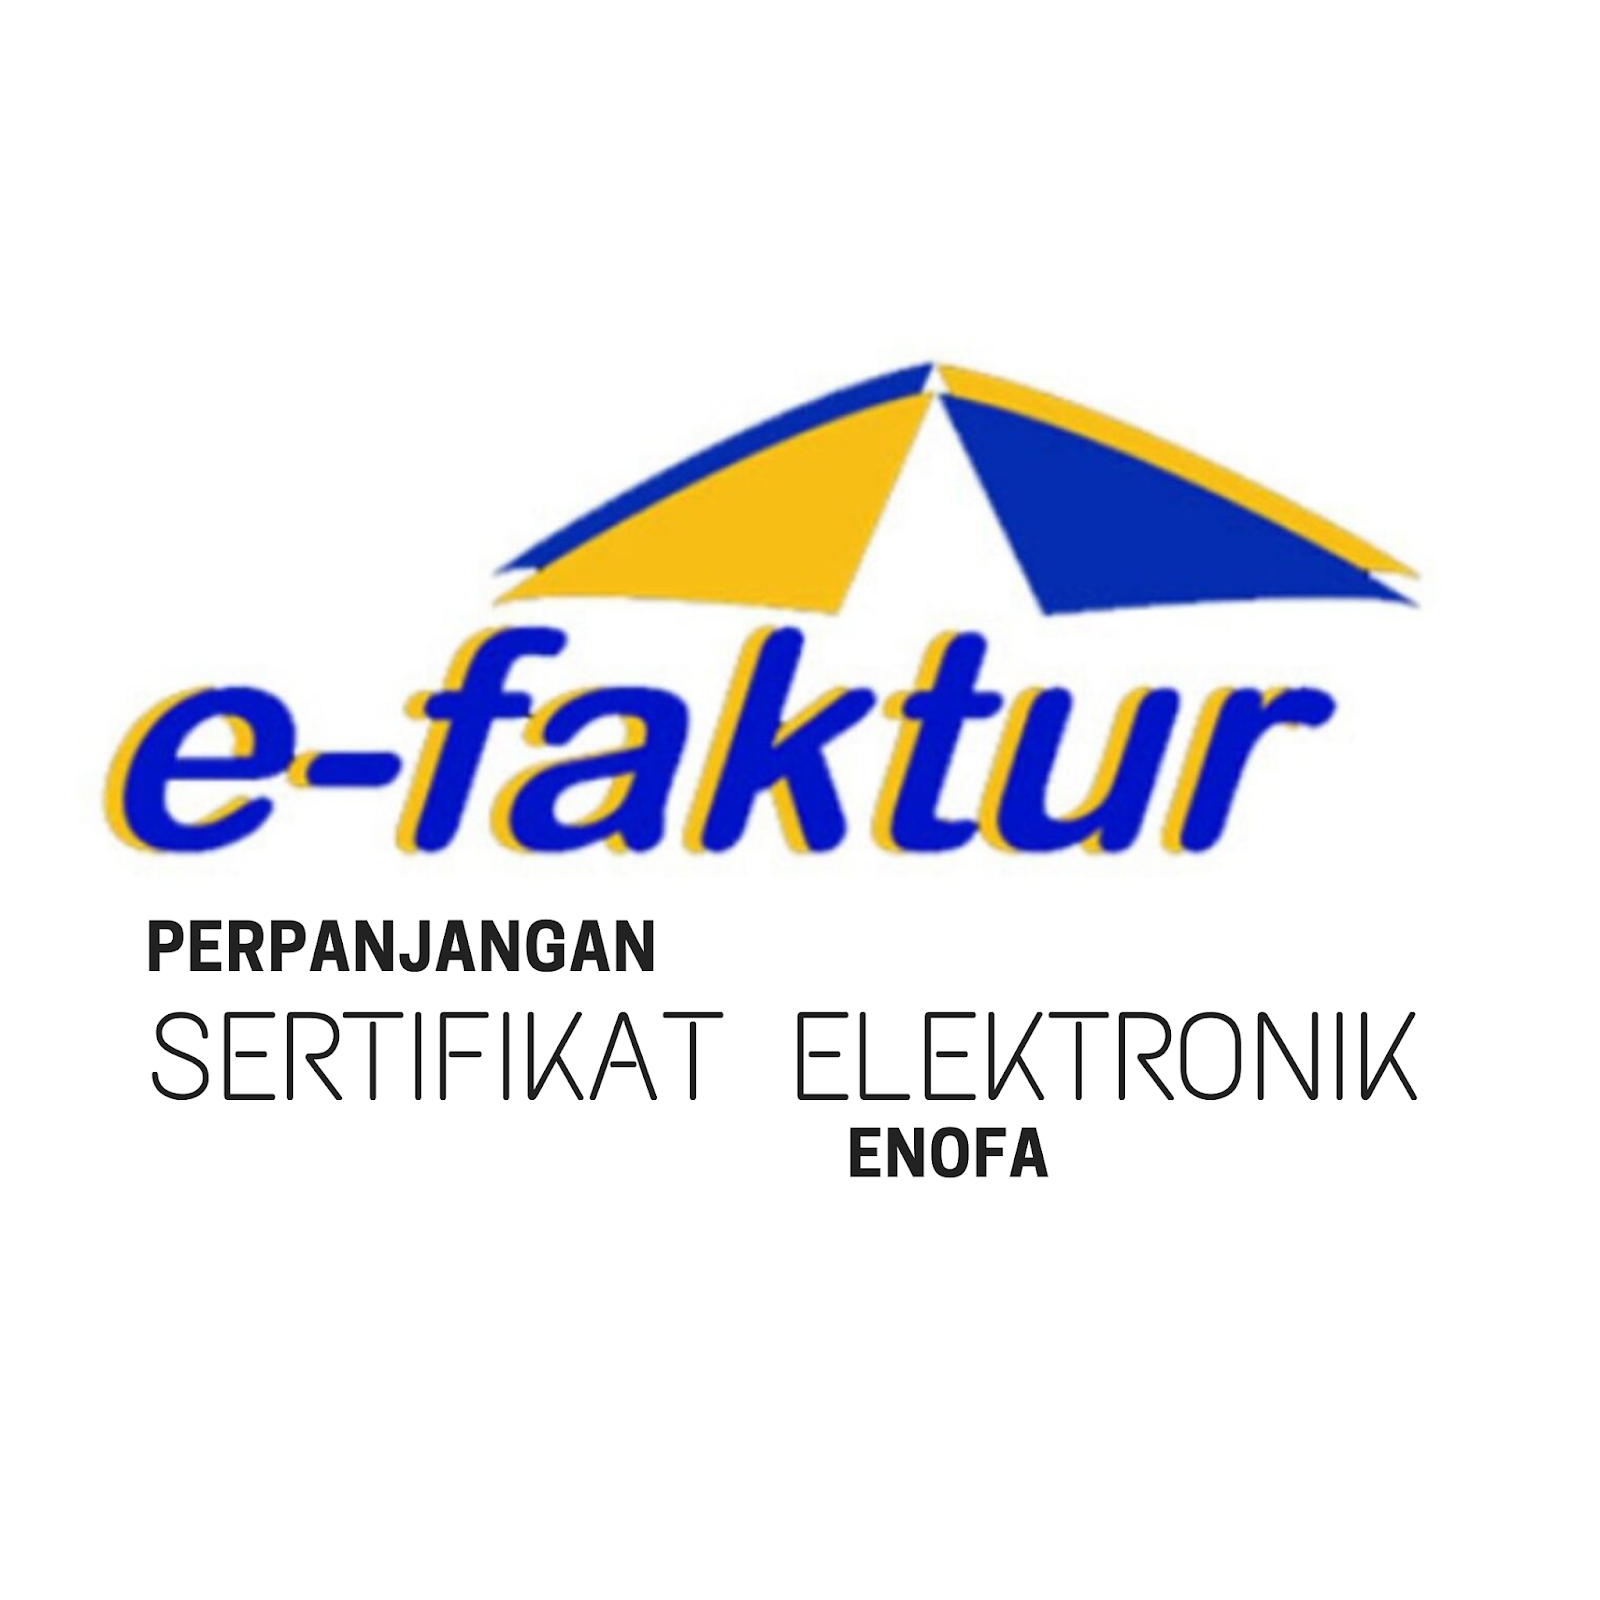 Perpanjangan Sertifikat Elektronik Enofa